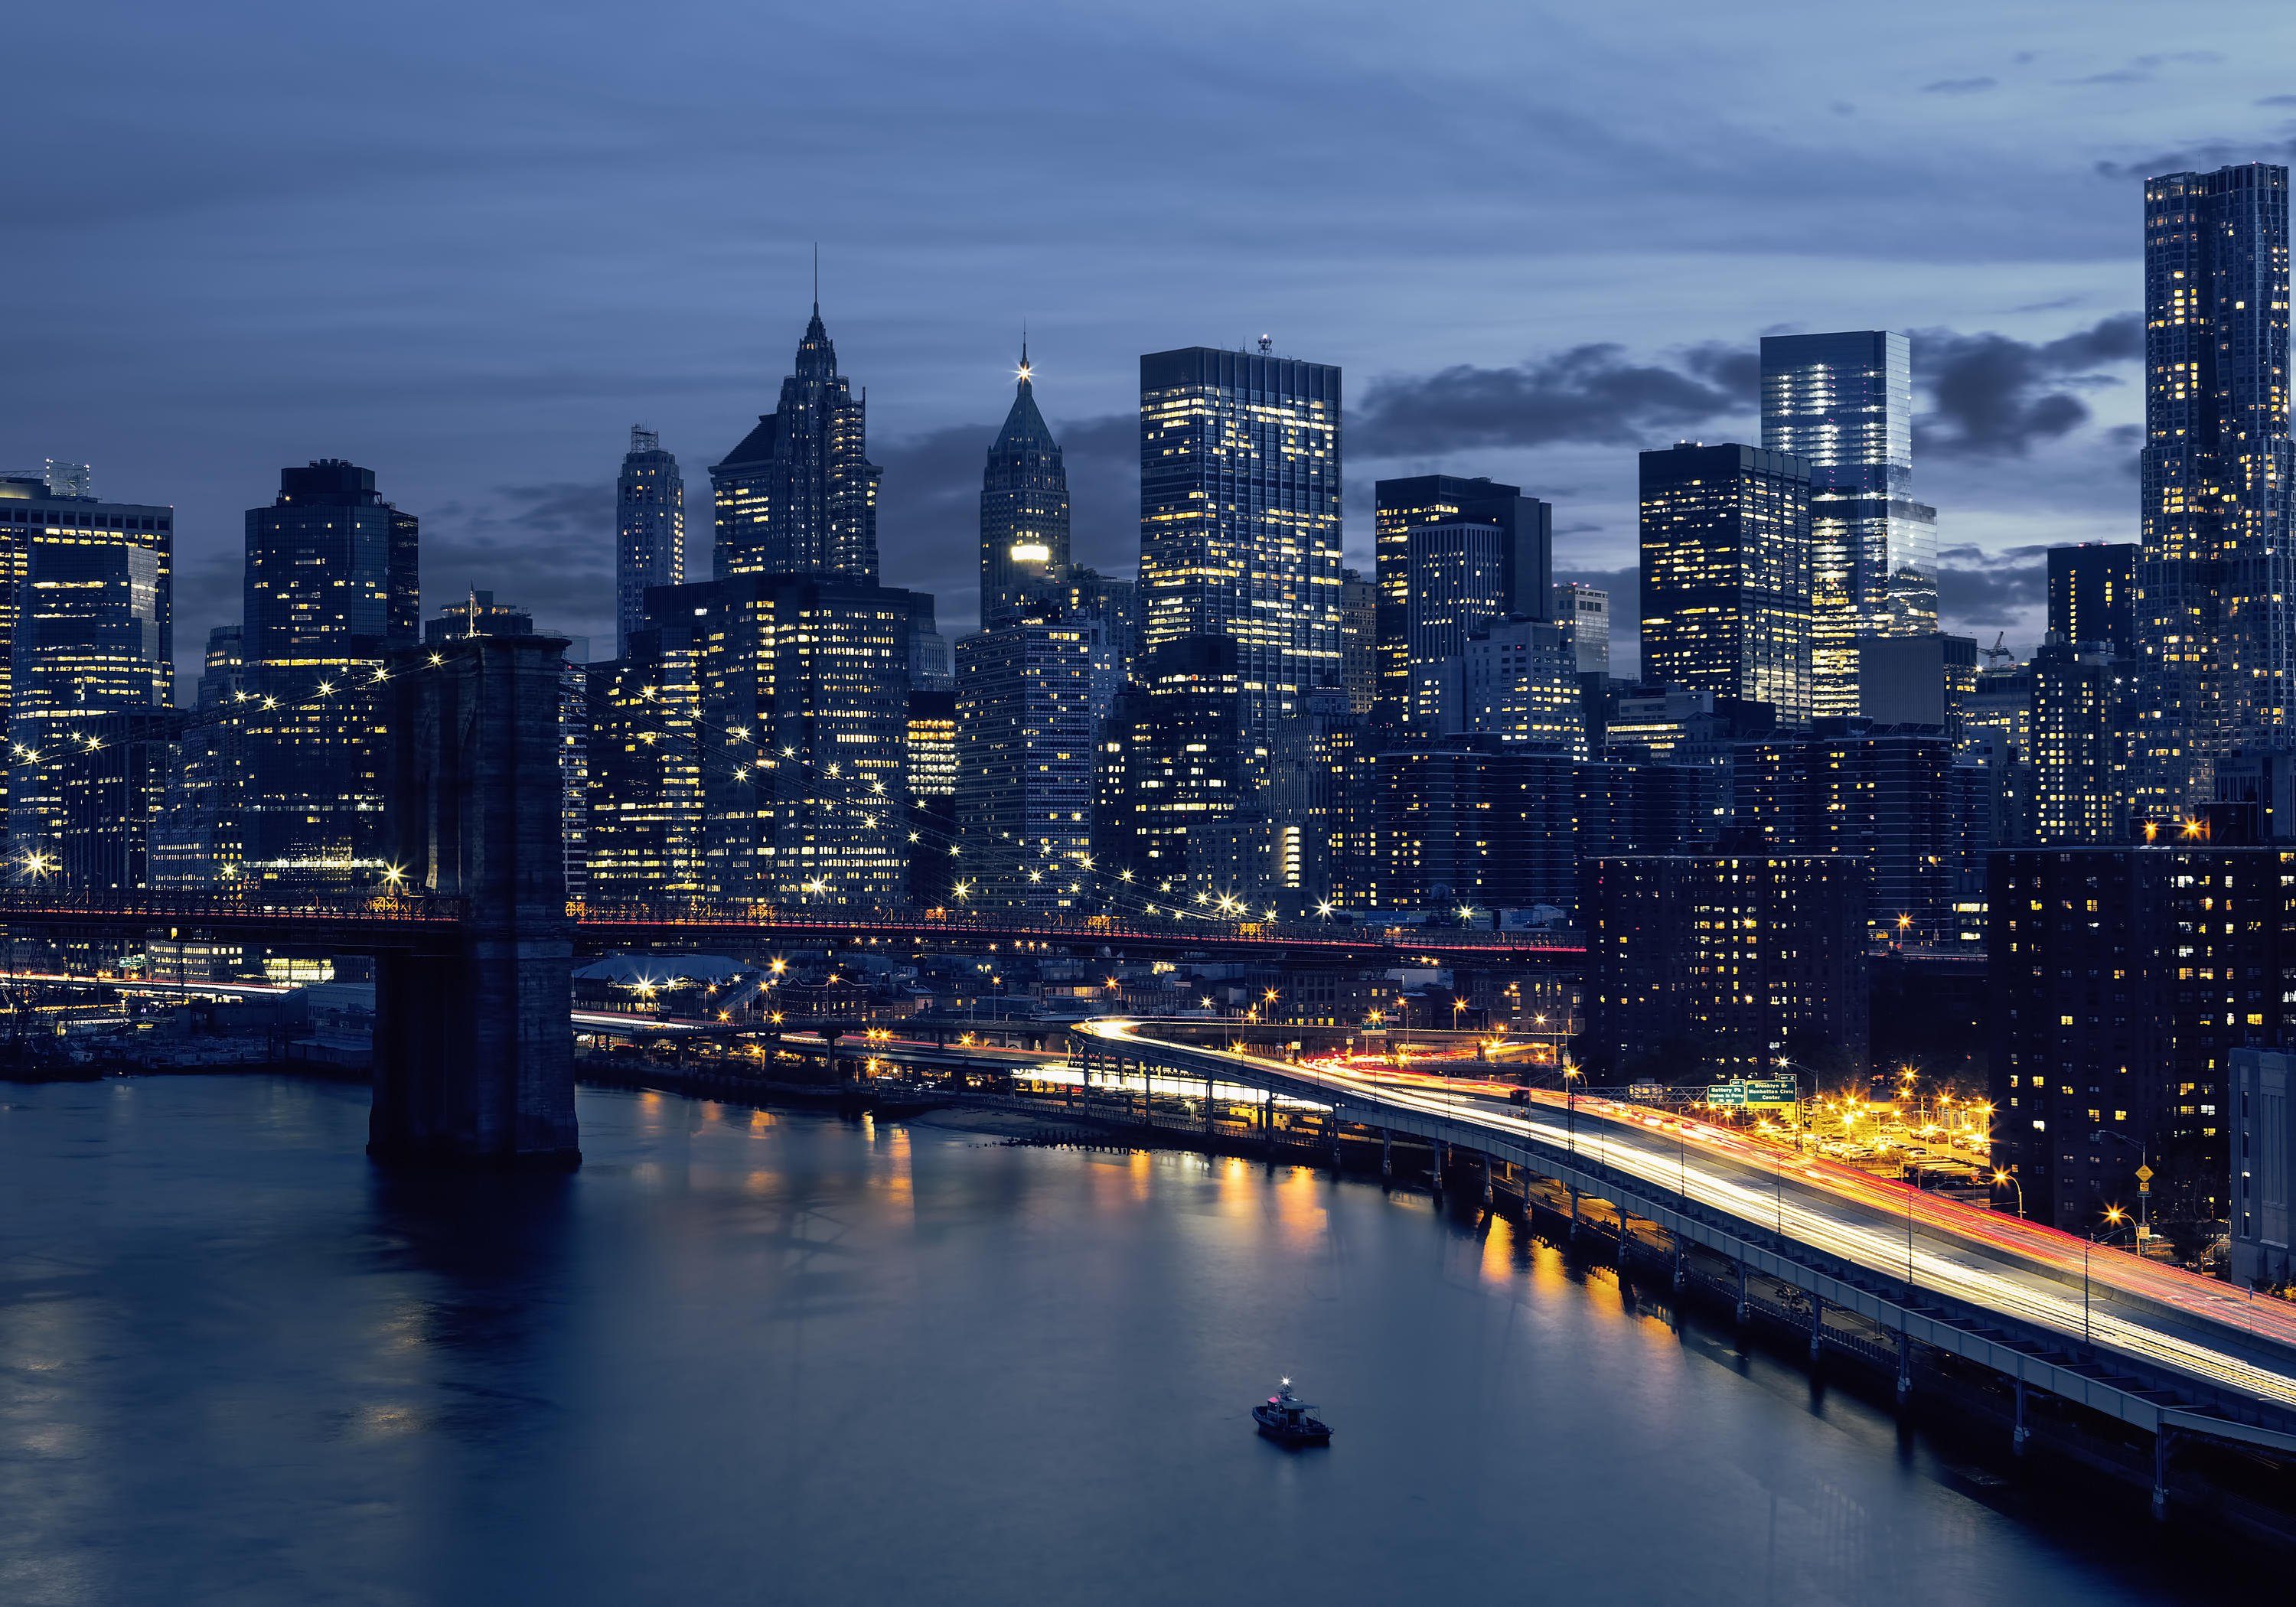 wandmotiv24 Fototapete Skyline der Innenstadt von New York, glatt, Wandtapete, Motivtapete, matt, Vliestapete